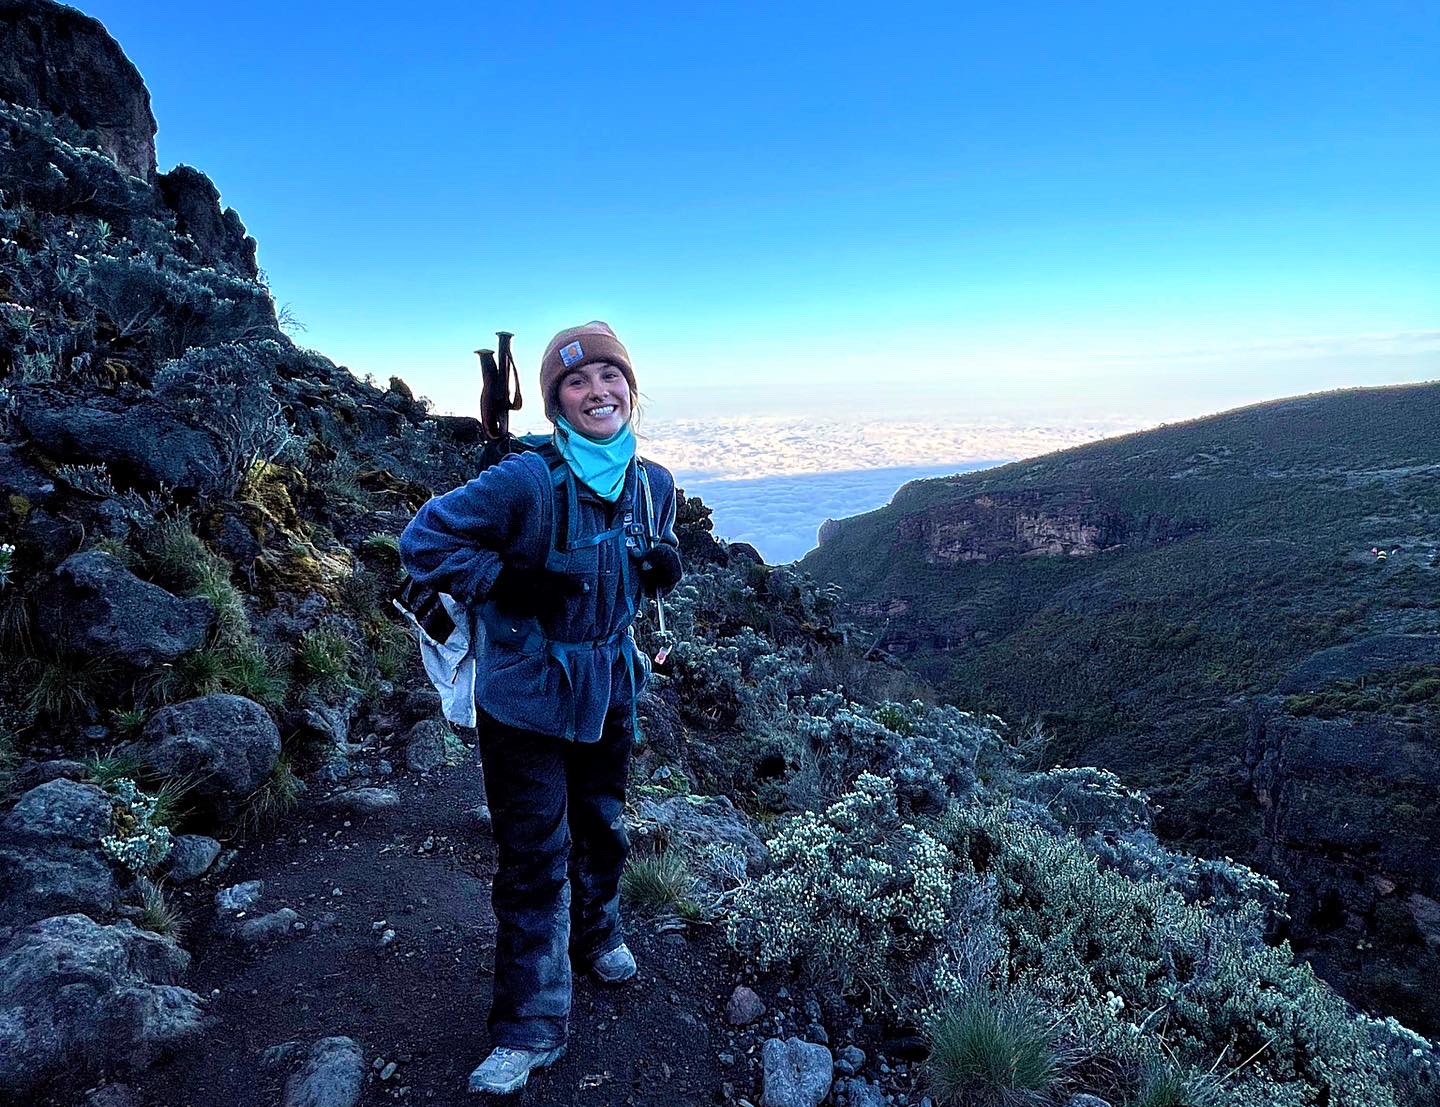 Climbing Mt. Kilimanjaro as the add-on